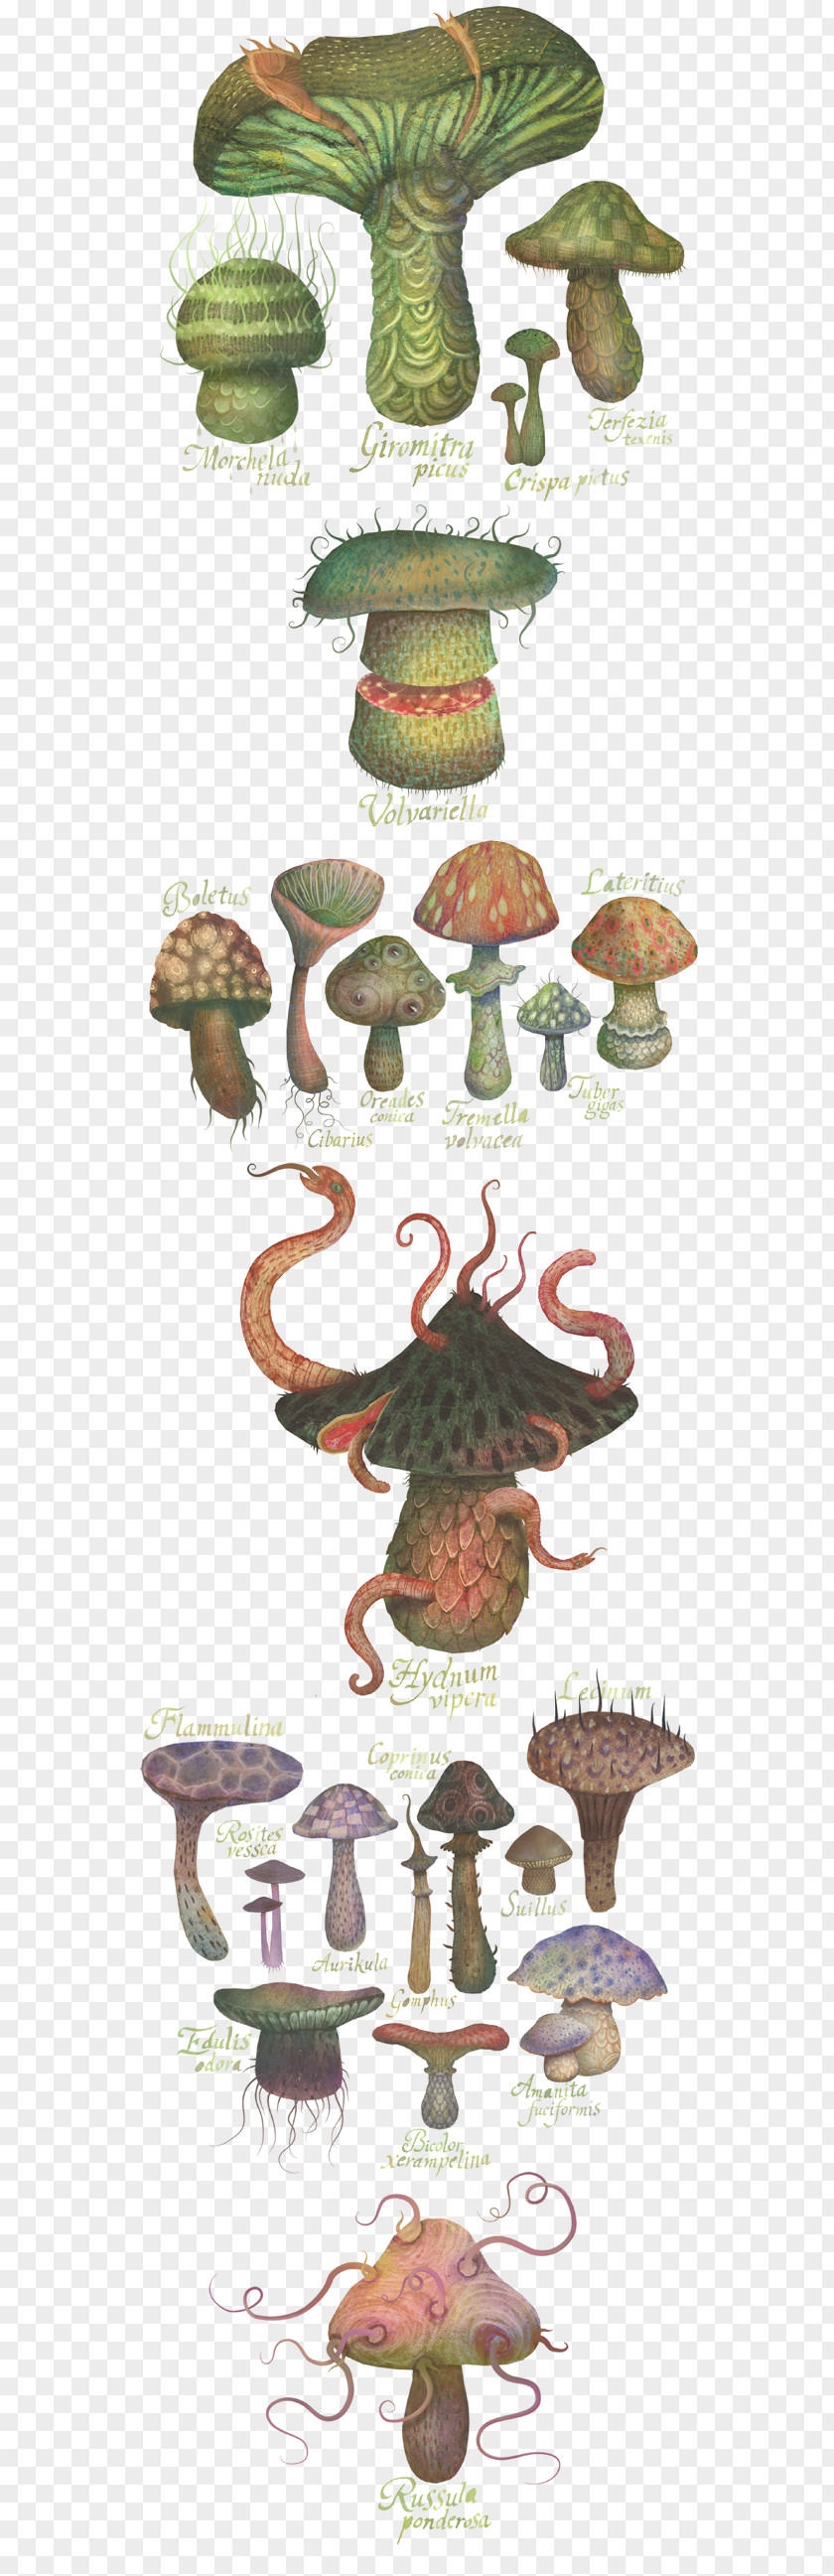 Mushroom The Fungus Kingdom Illustration Drawing PNG